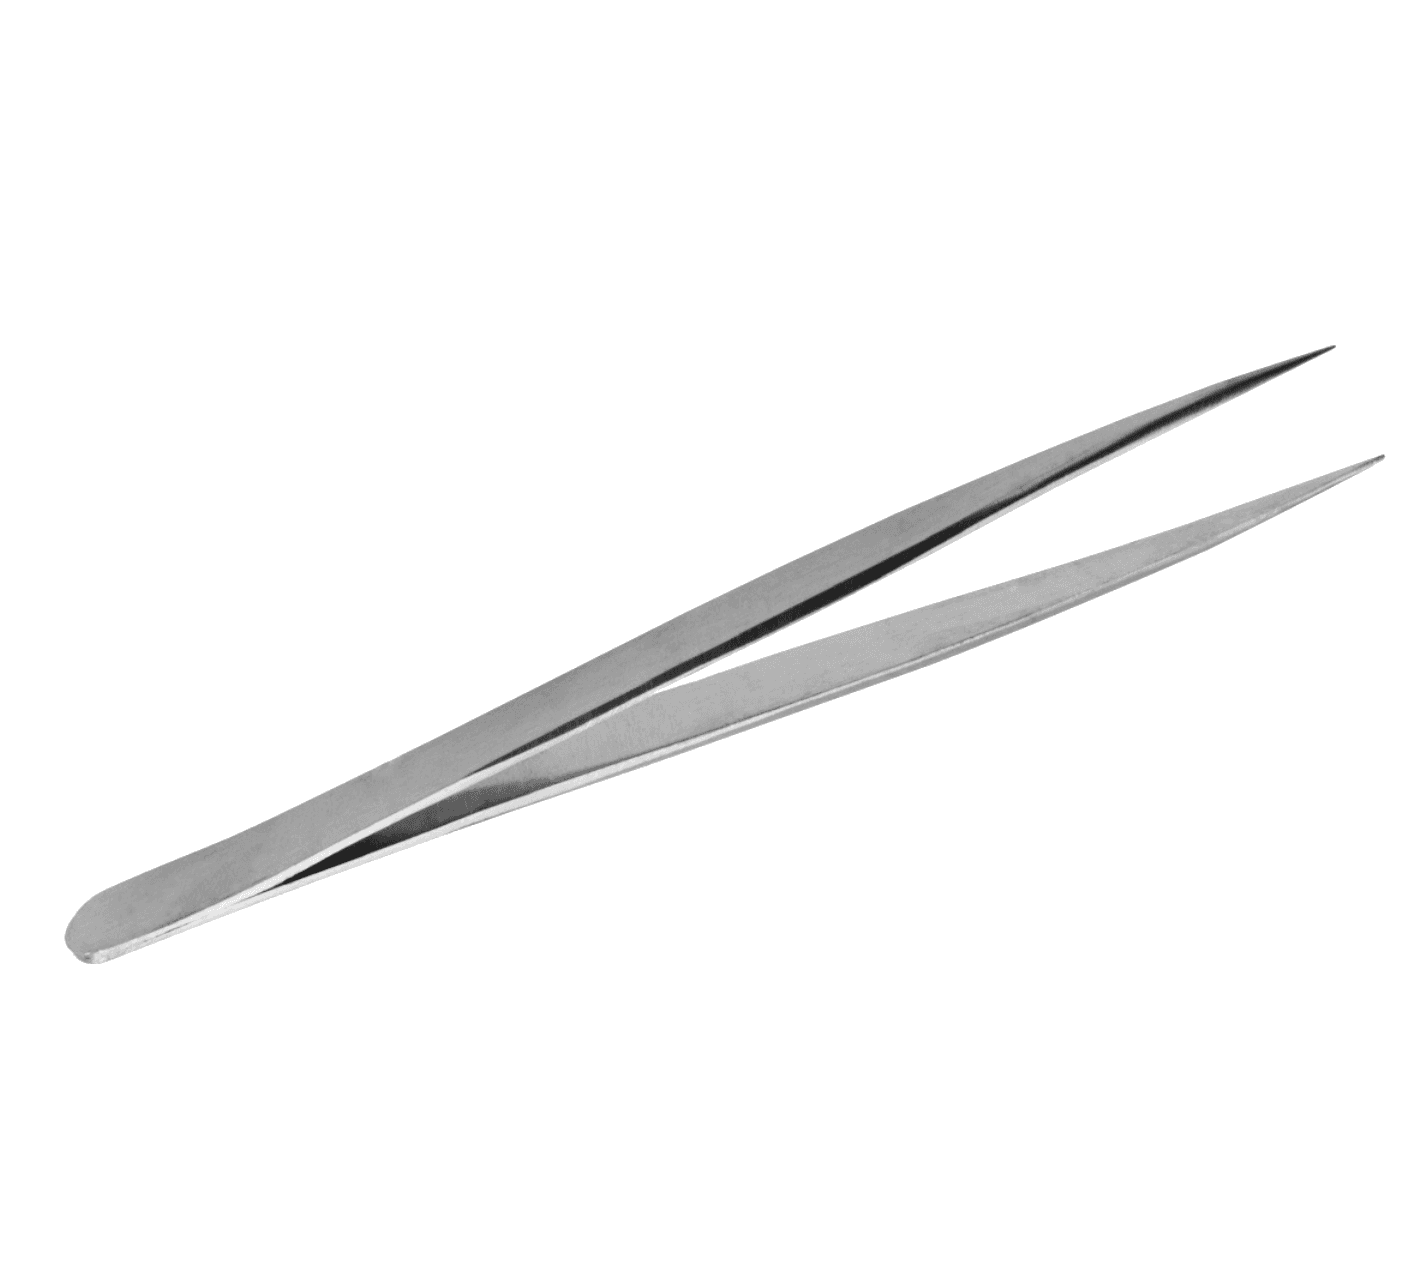 Straight sharp tweezers TS-11 142 mm